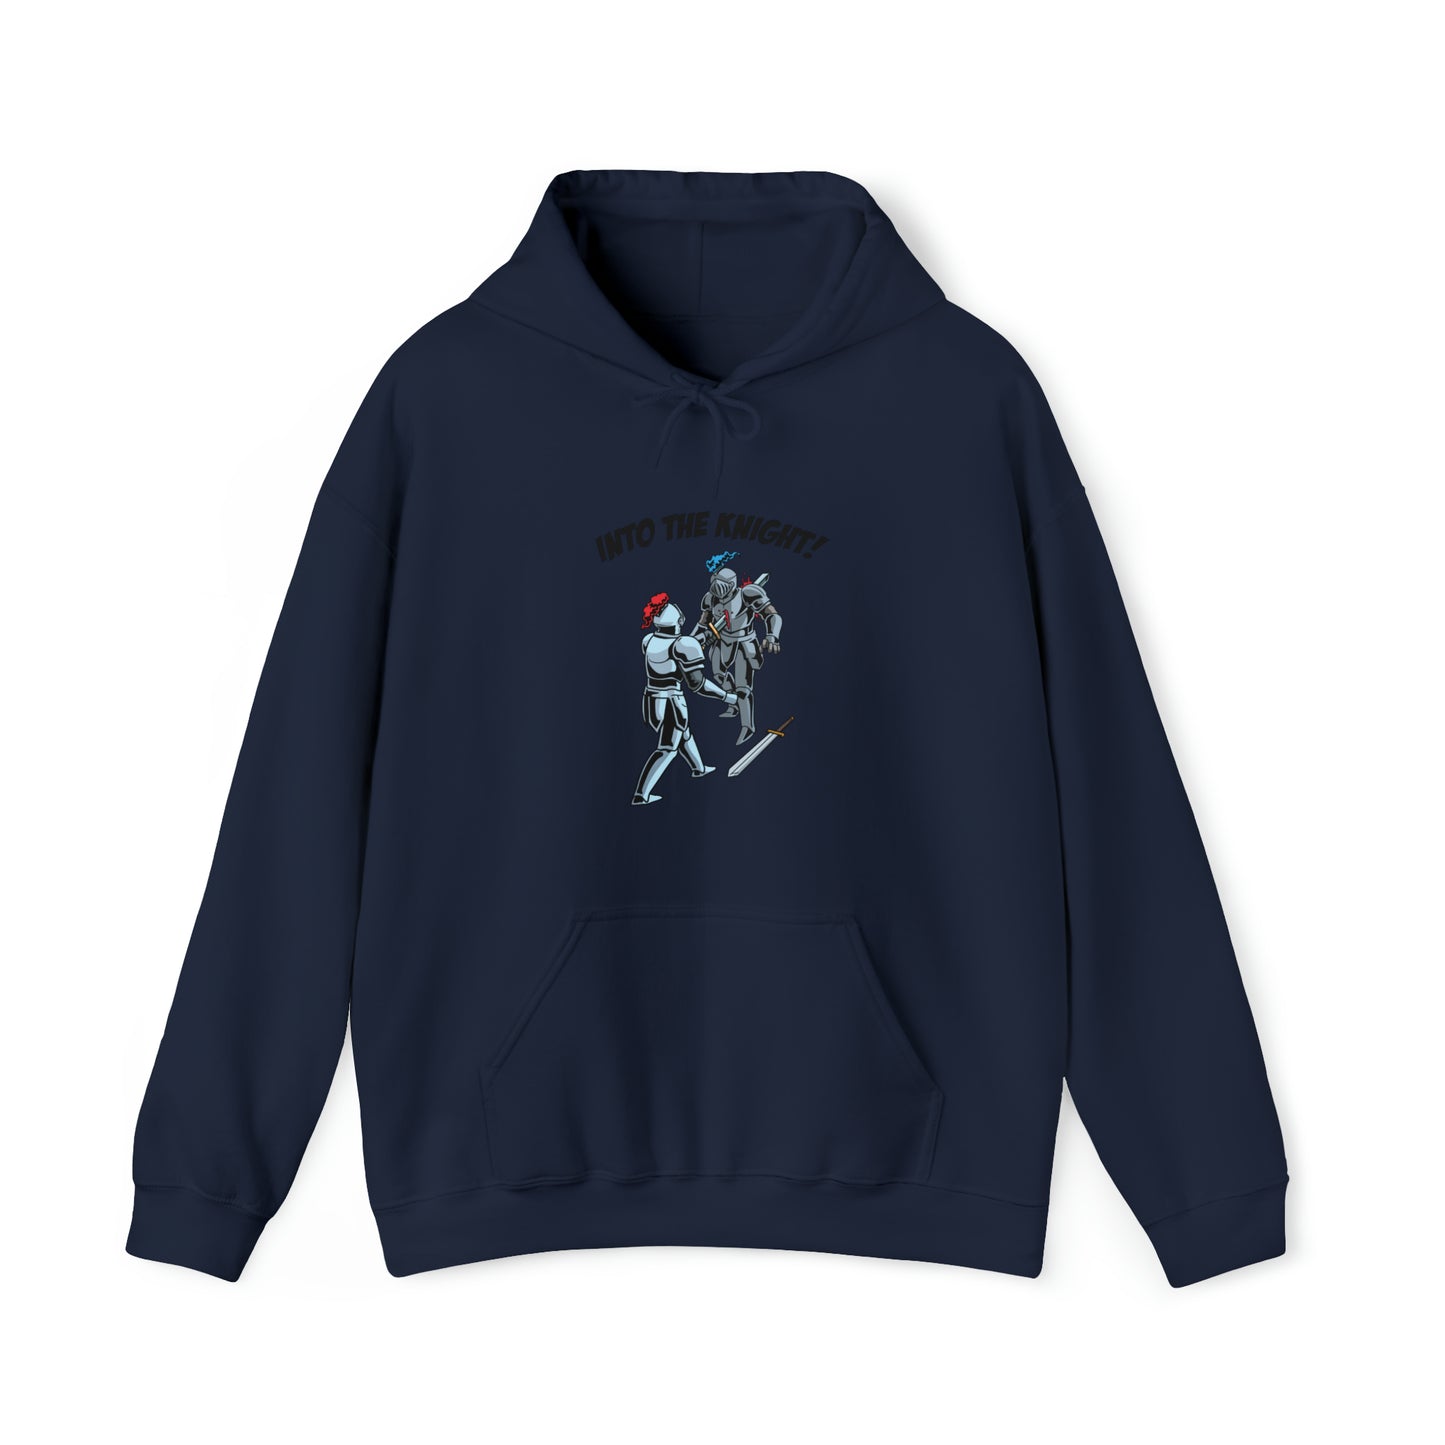 Custom Parody Hooded Sweatshirt, Into The Knight design